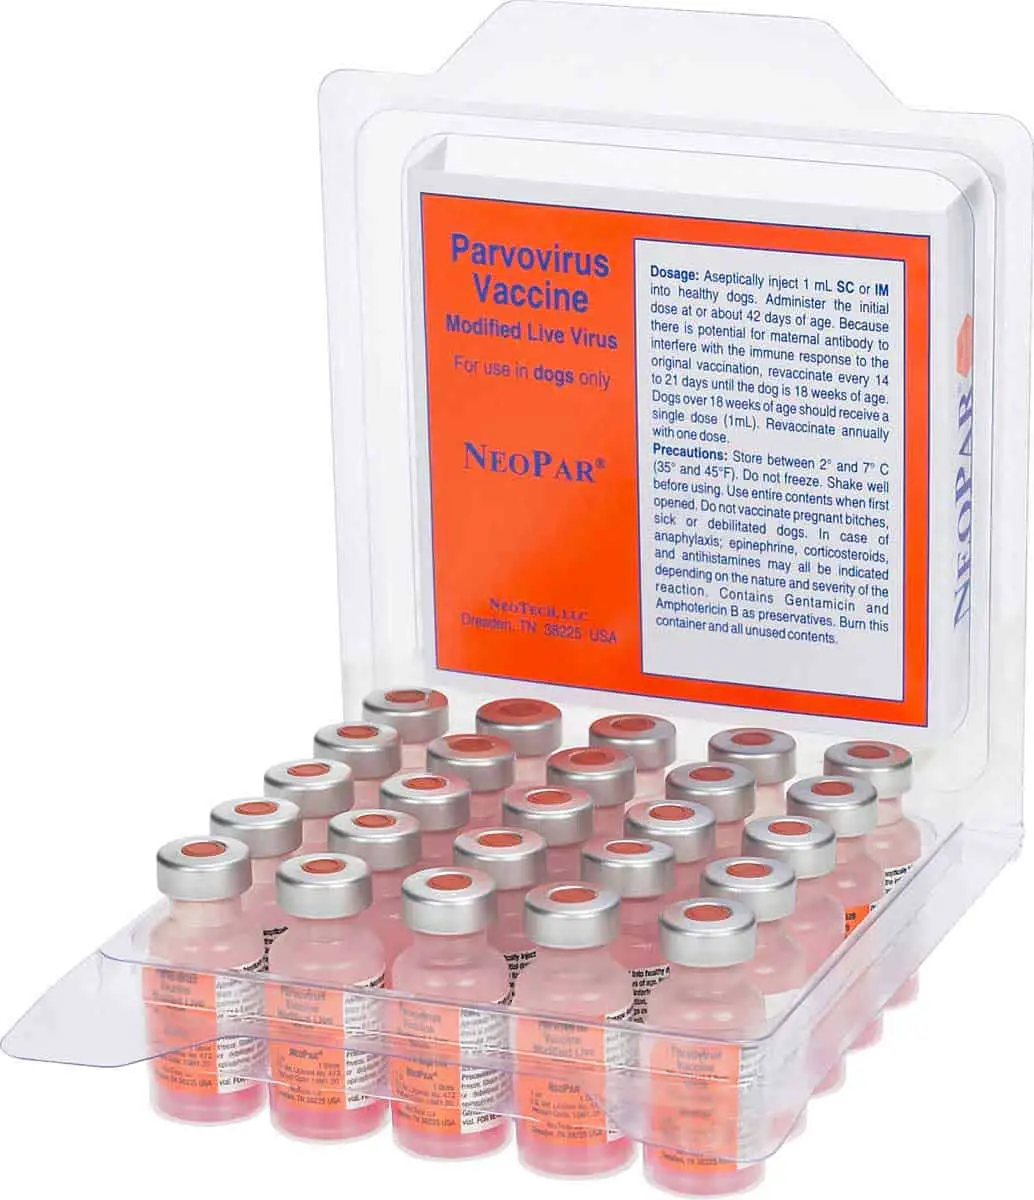 NeoPar Parvo Dog Vaccine (25 Dose)